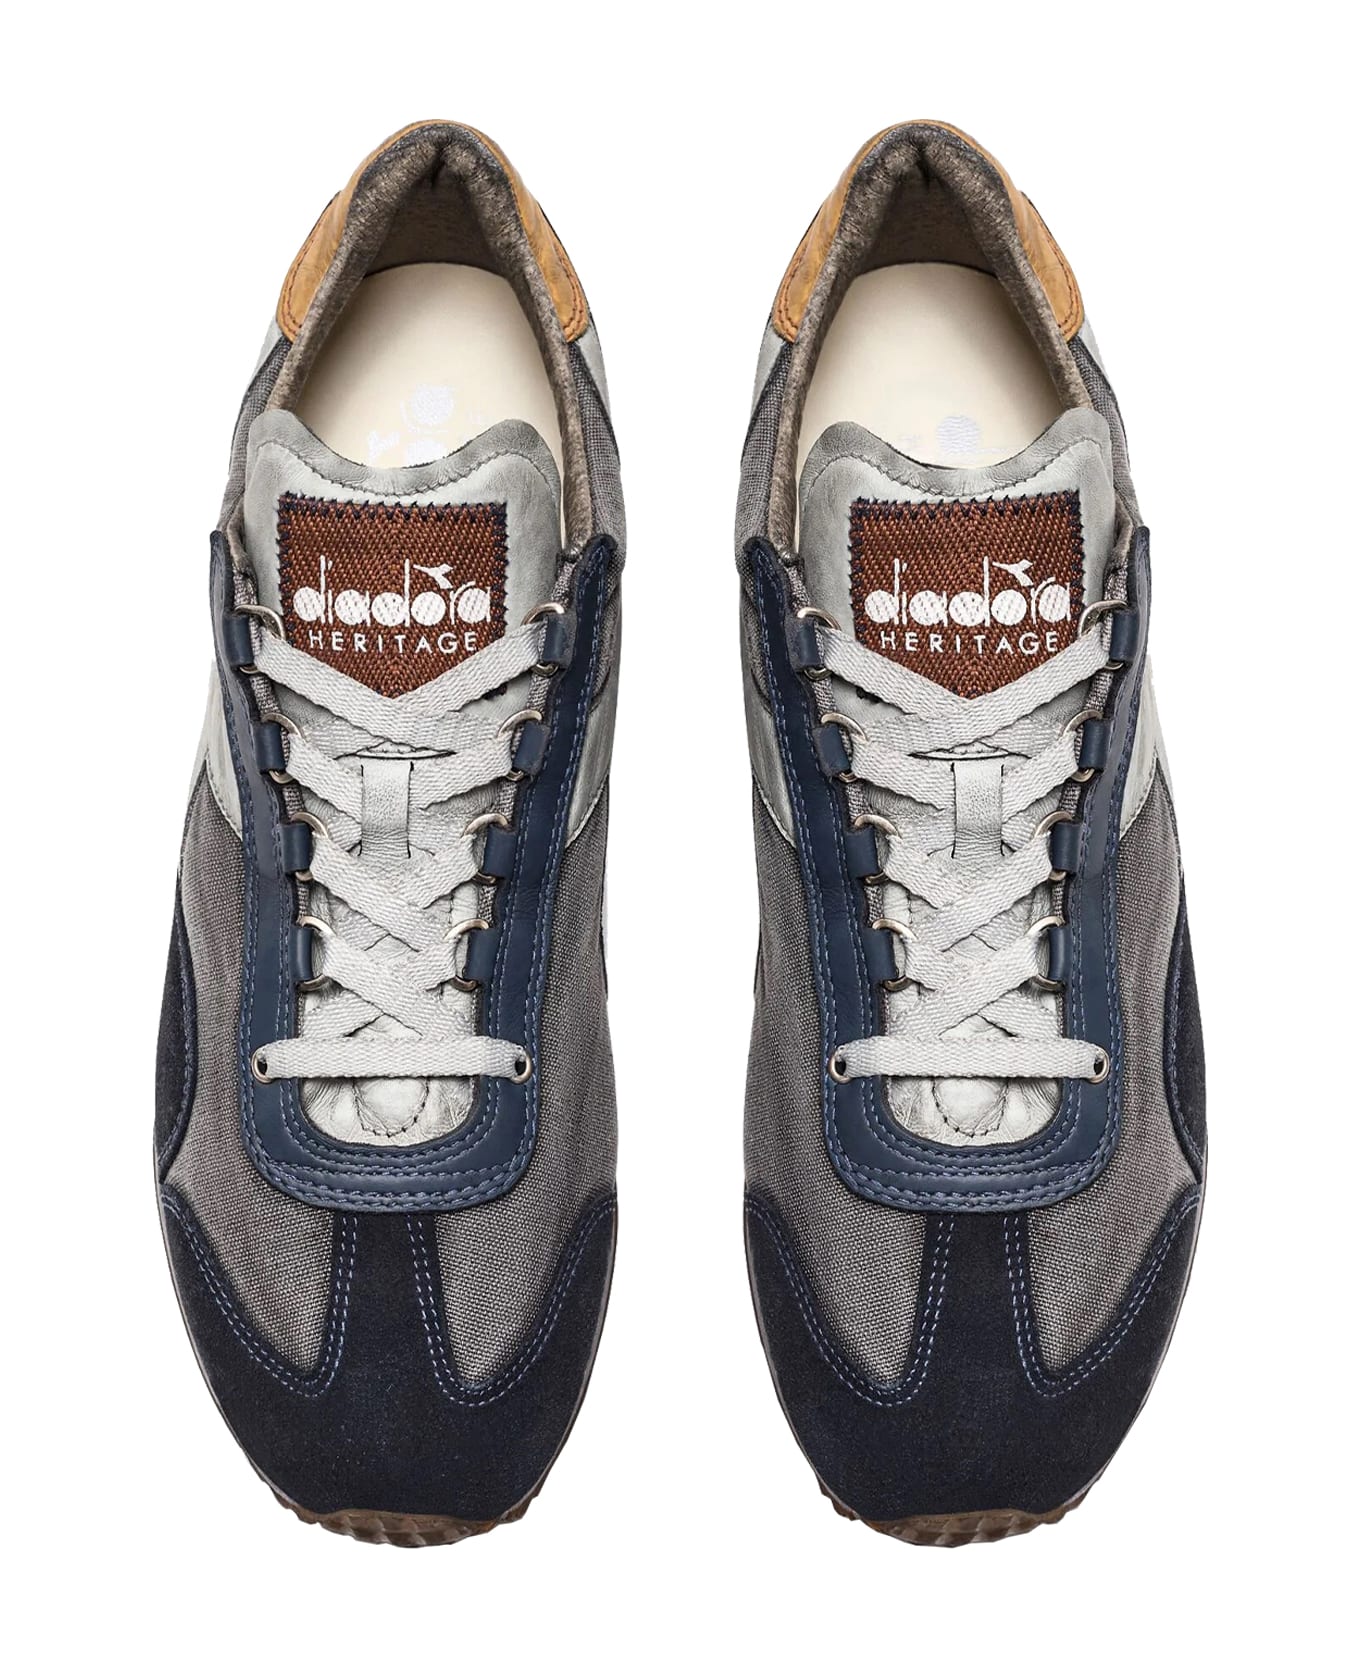 Diadora Heritage Sneakers - Blue